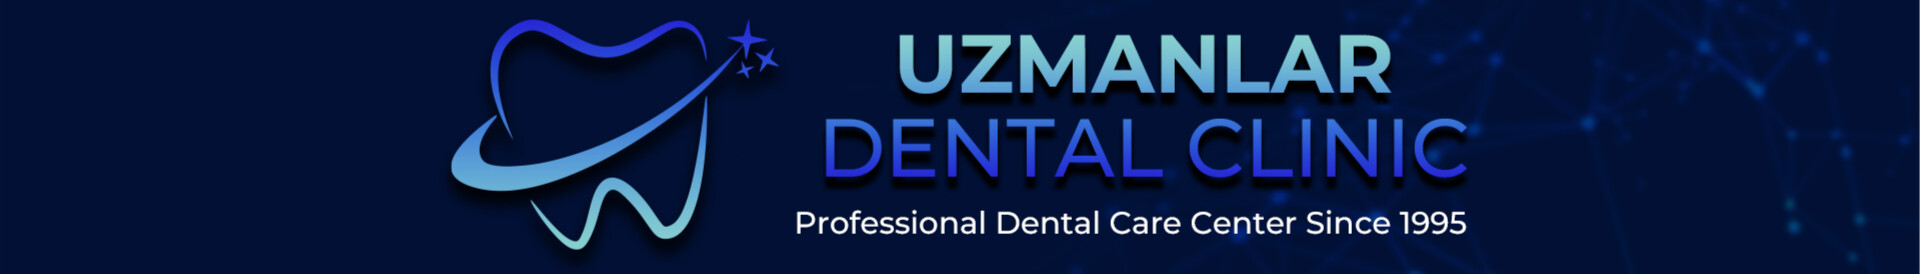 Uzmanlar Dental Clinic - Cover Photo